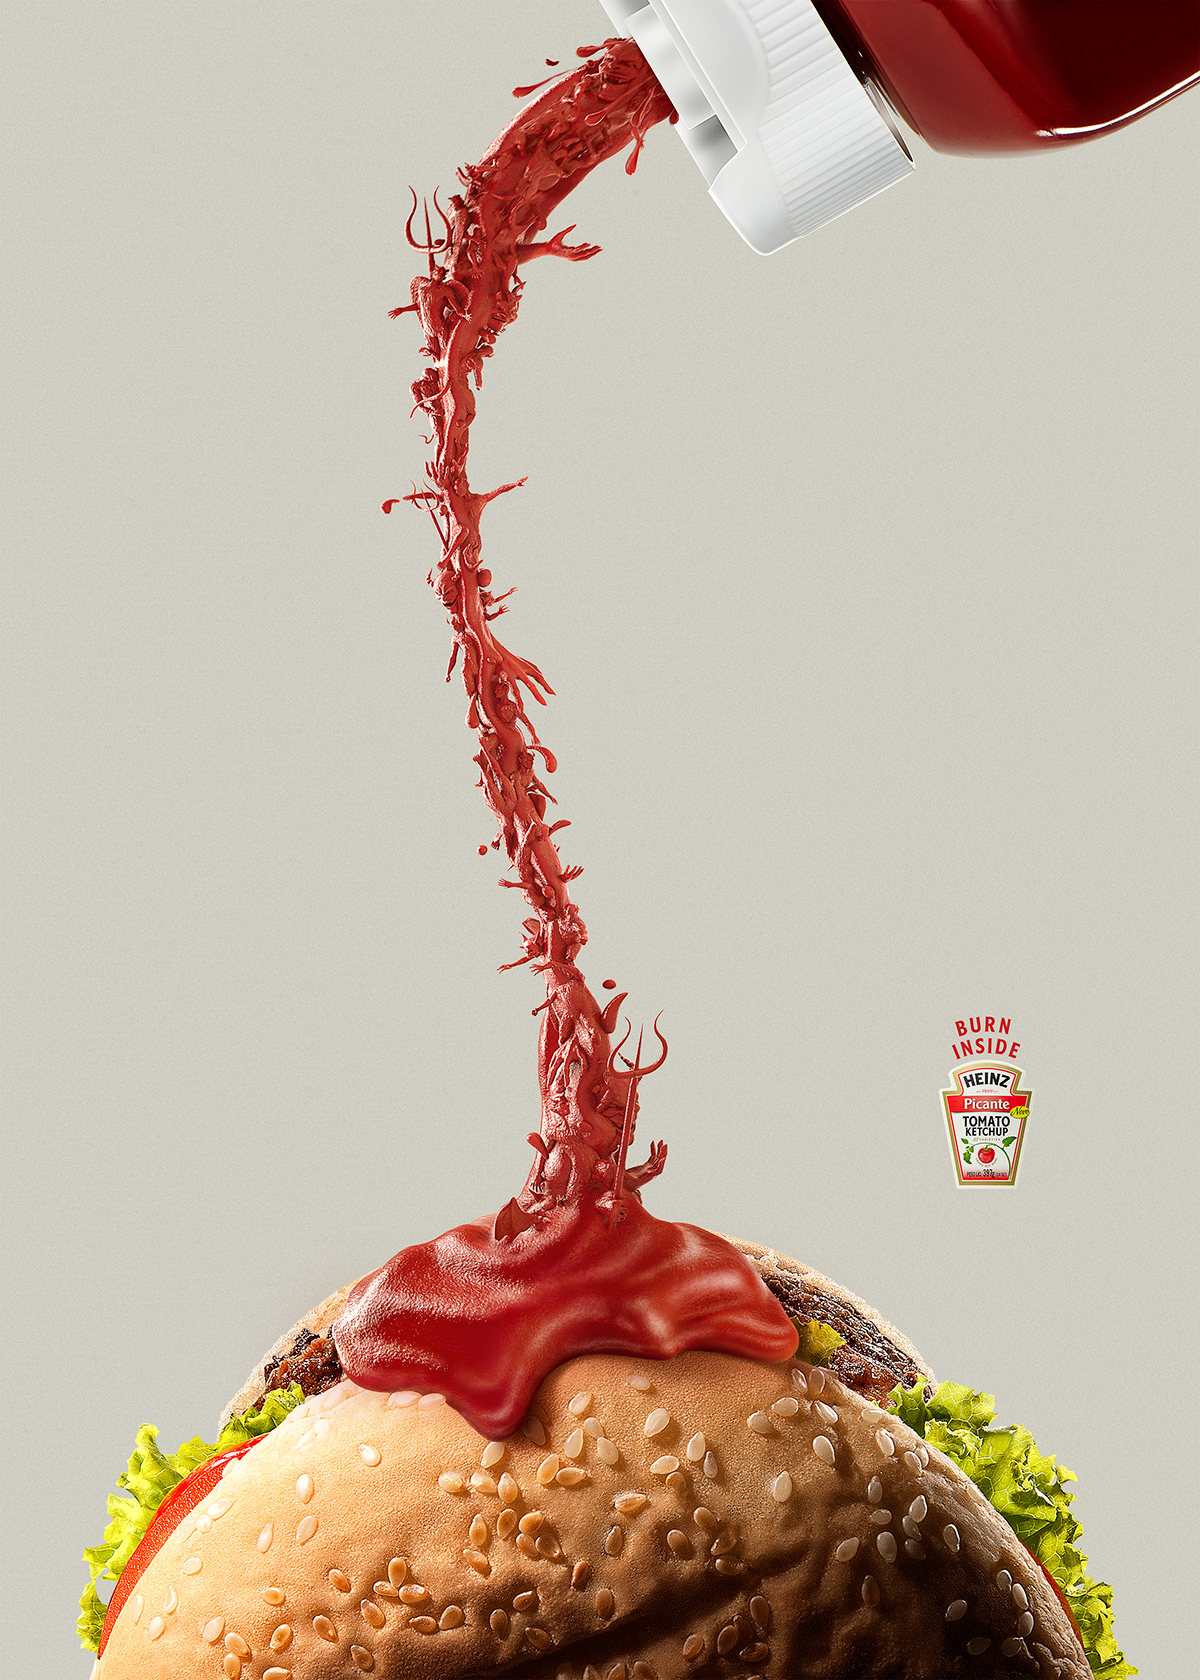 3D heinz ketchup pepper Chilli spice hot dog burger Demons hell Hot print CGI